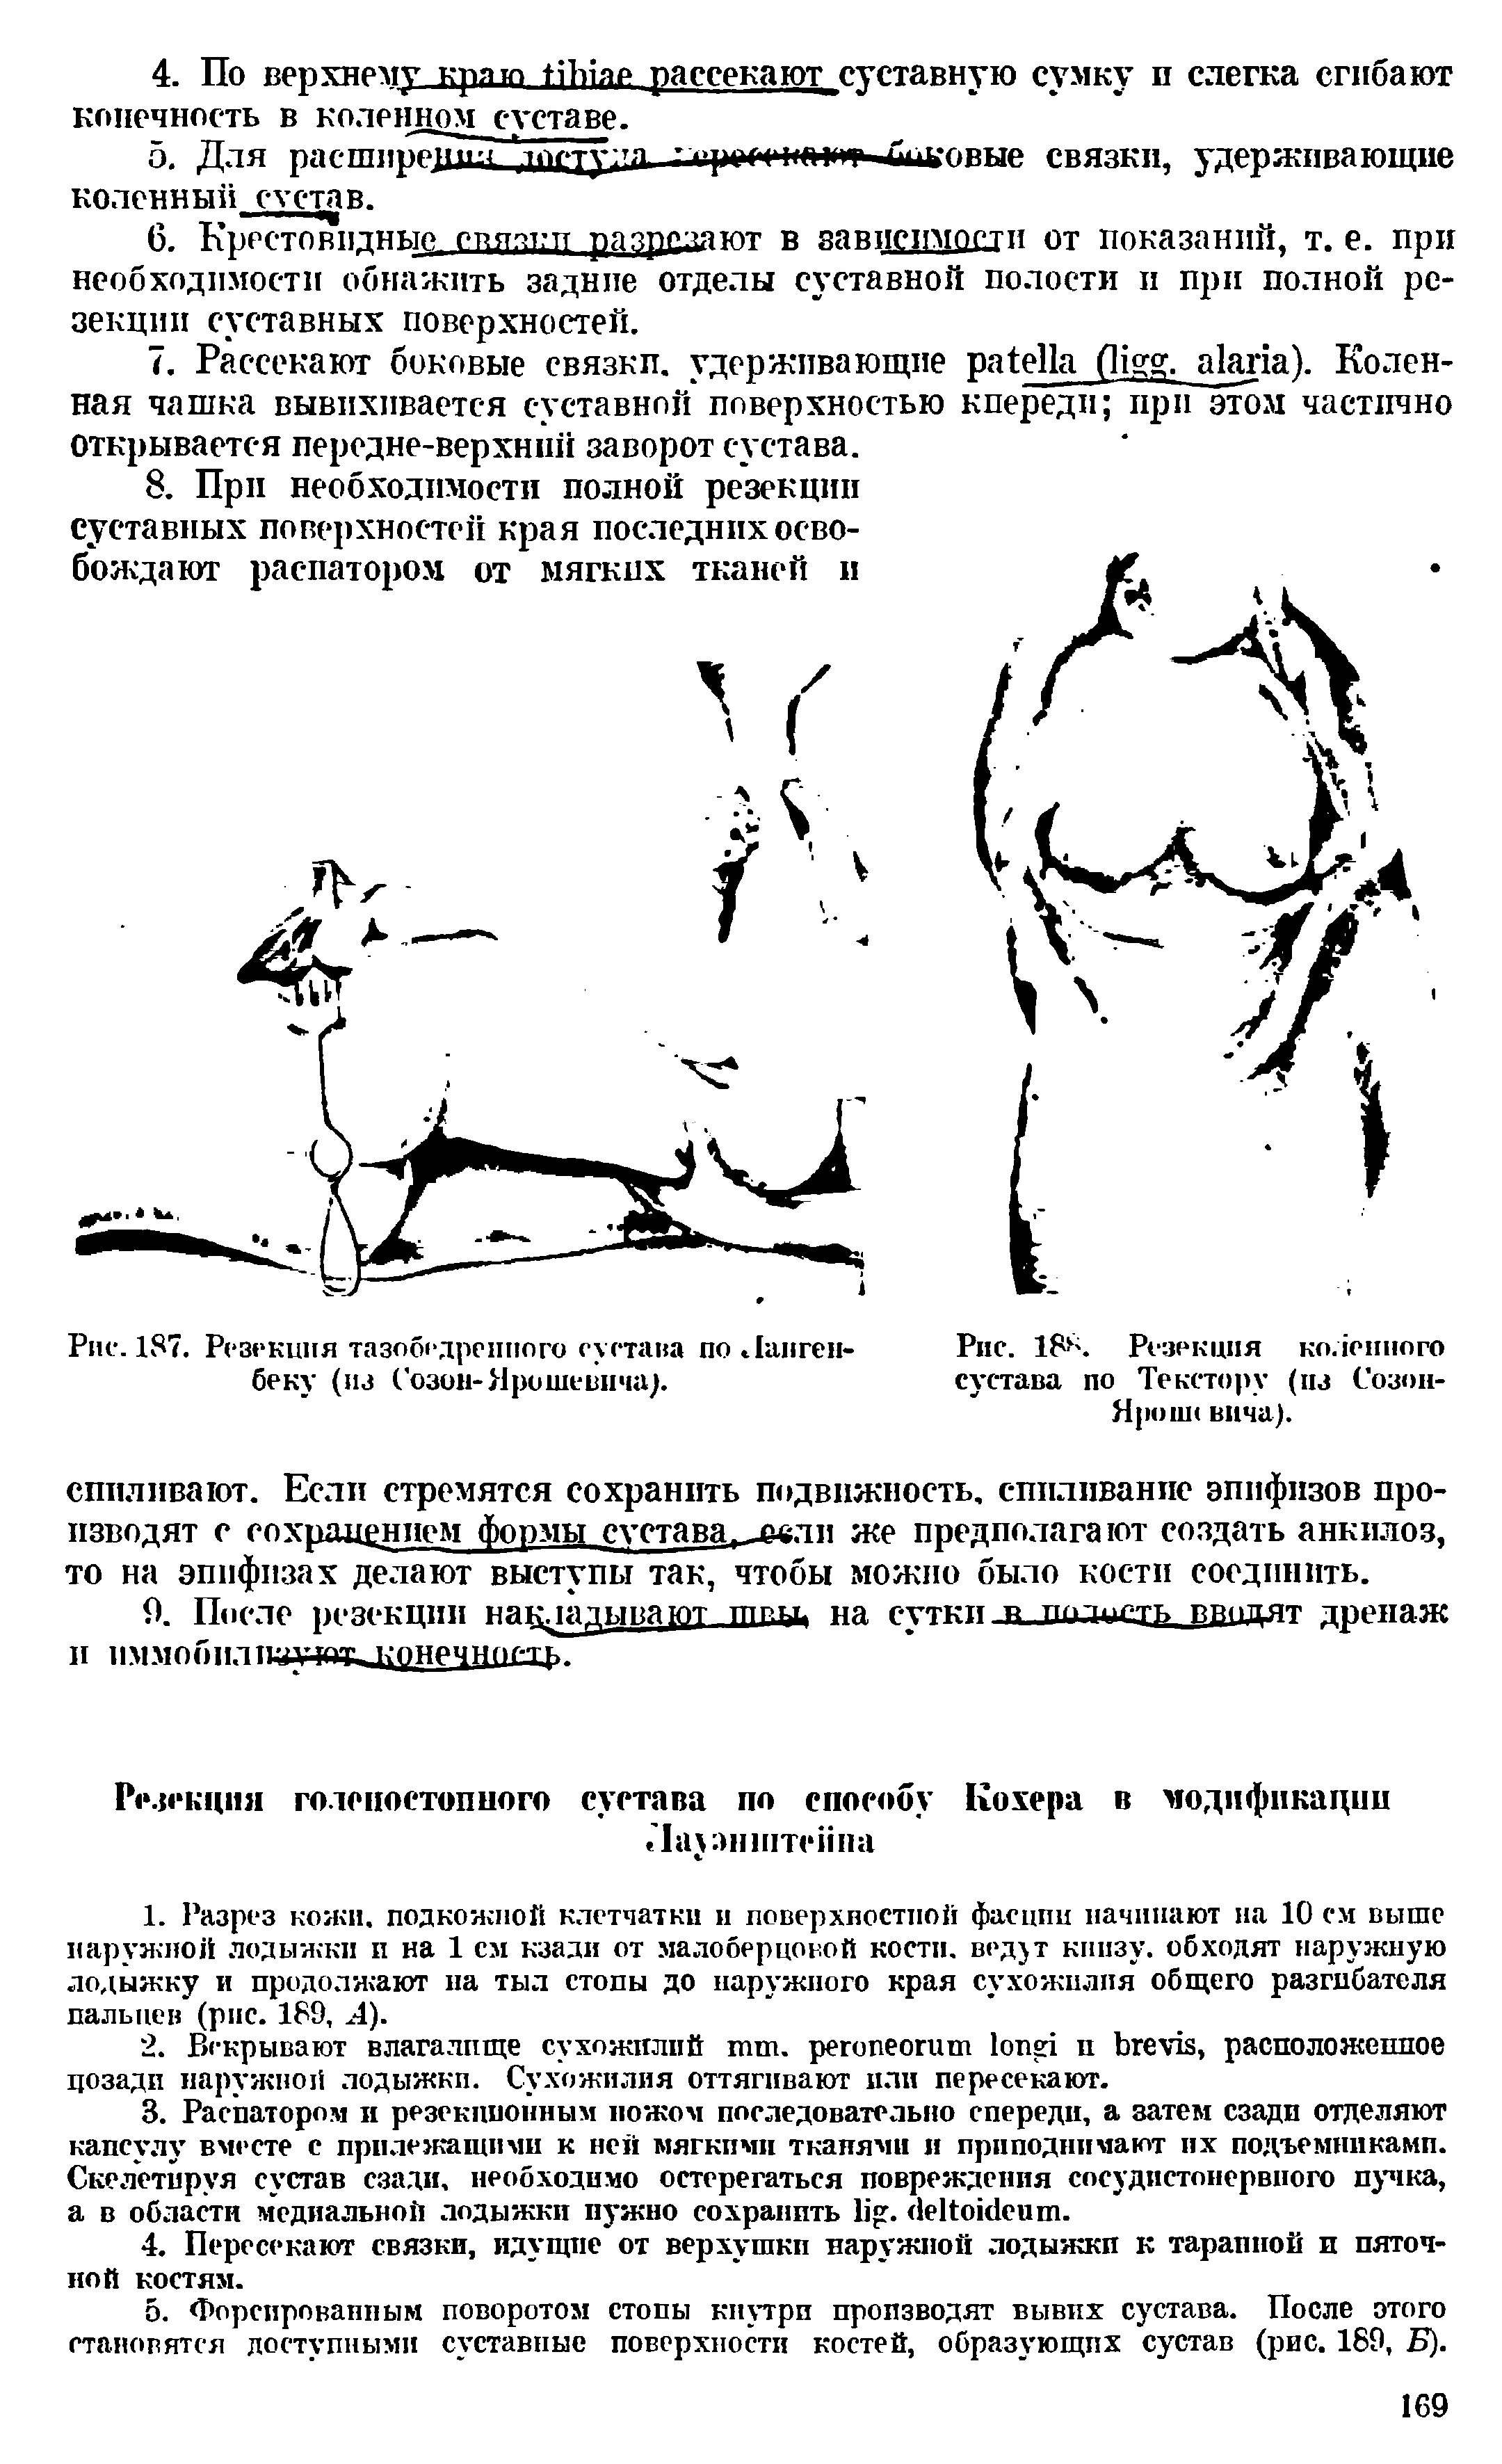 Рис. 18-. Резекция коленного сустава по Текстору (из Созон-Ярош< вича).